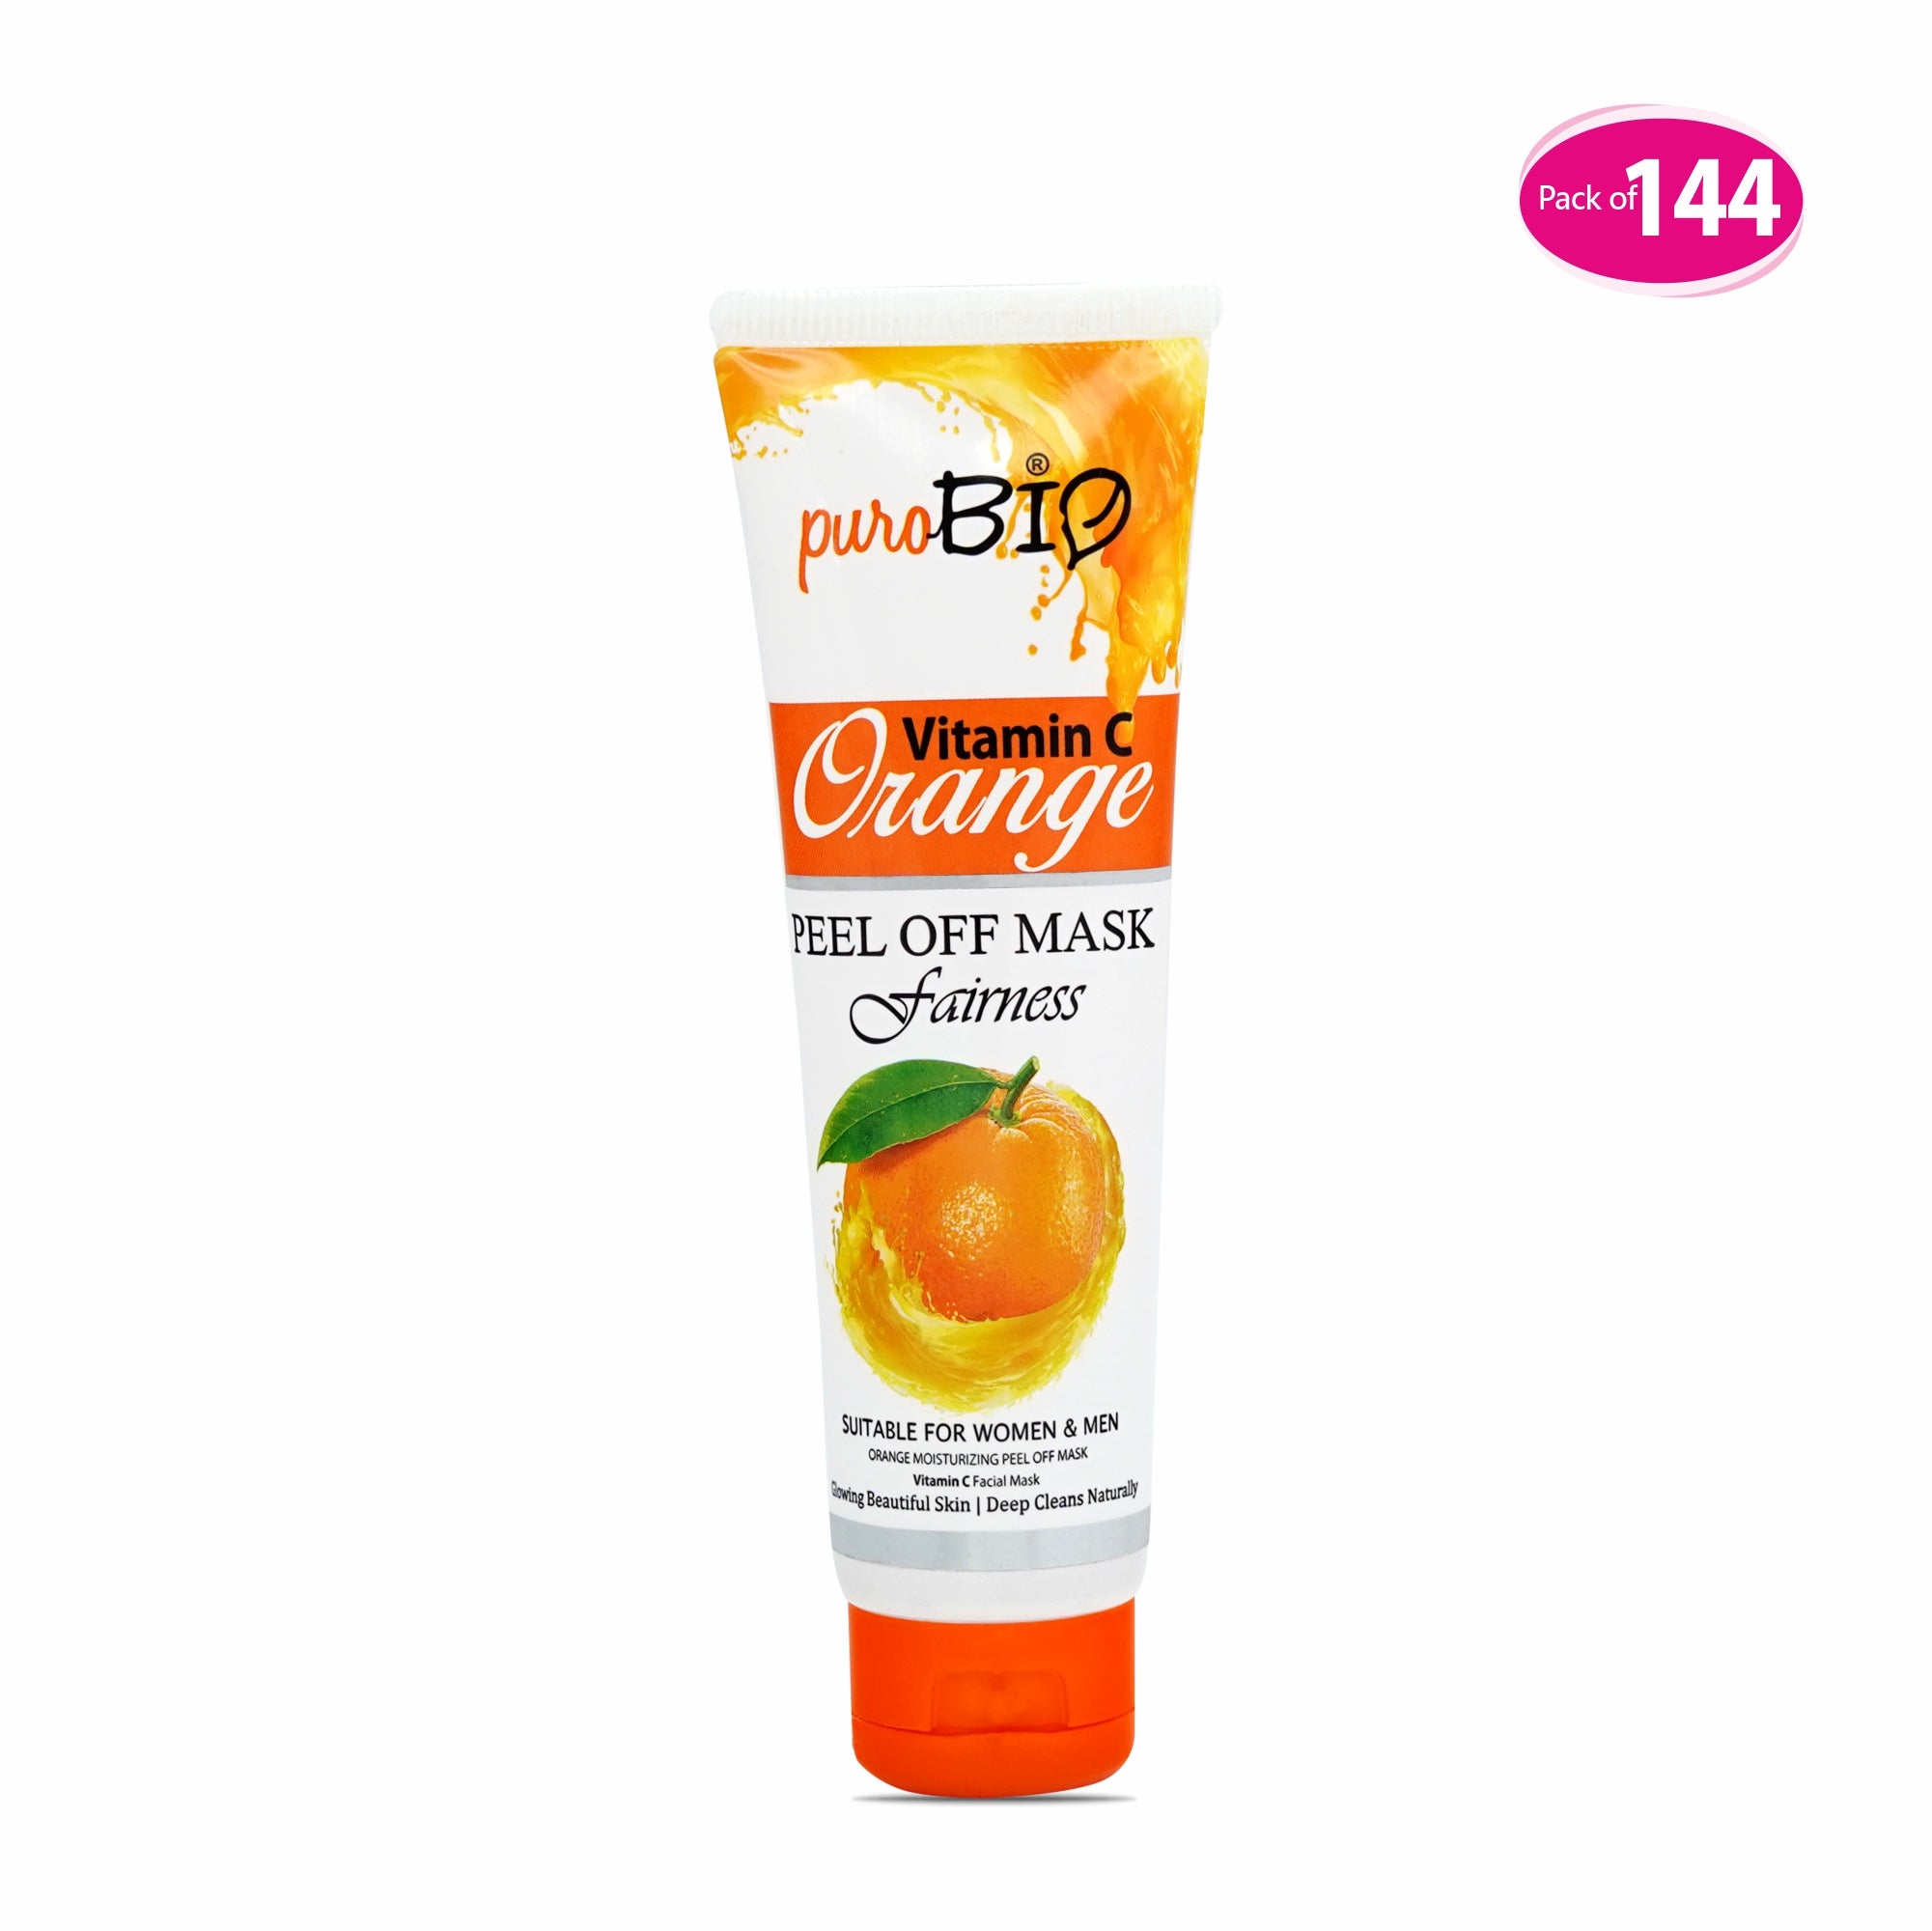 Vitamin-C Orange peel off mask in bulk 144 quantity